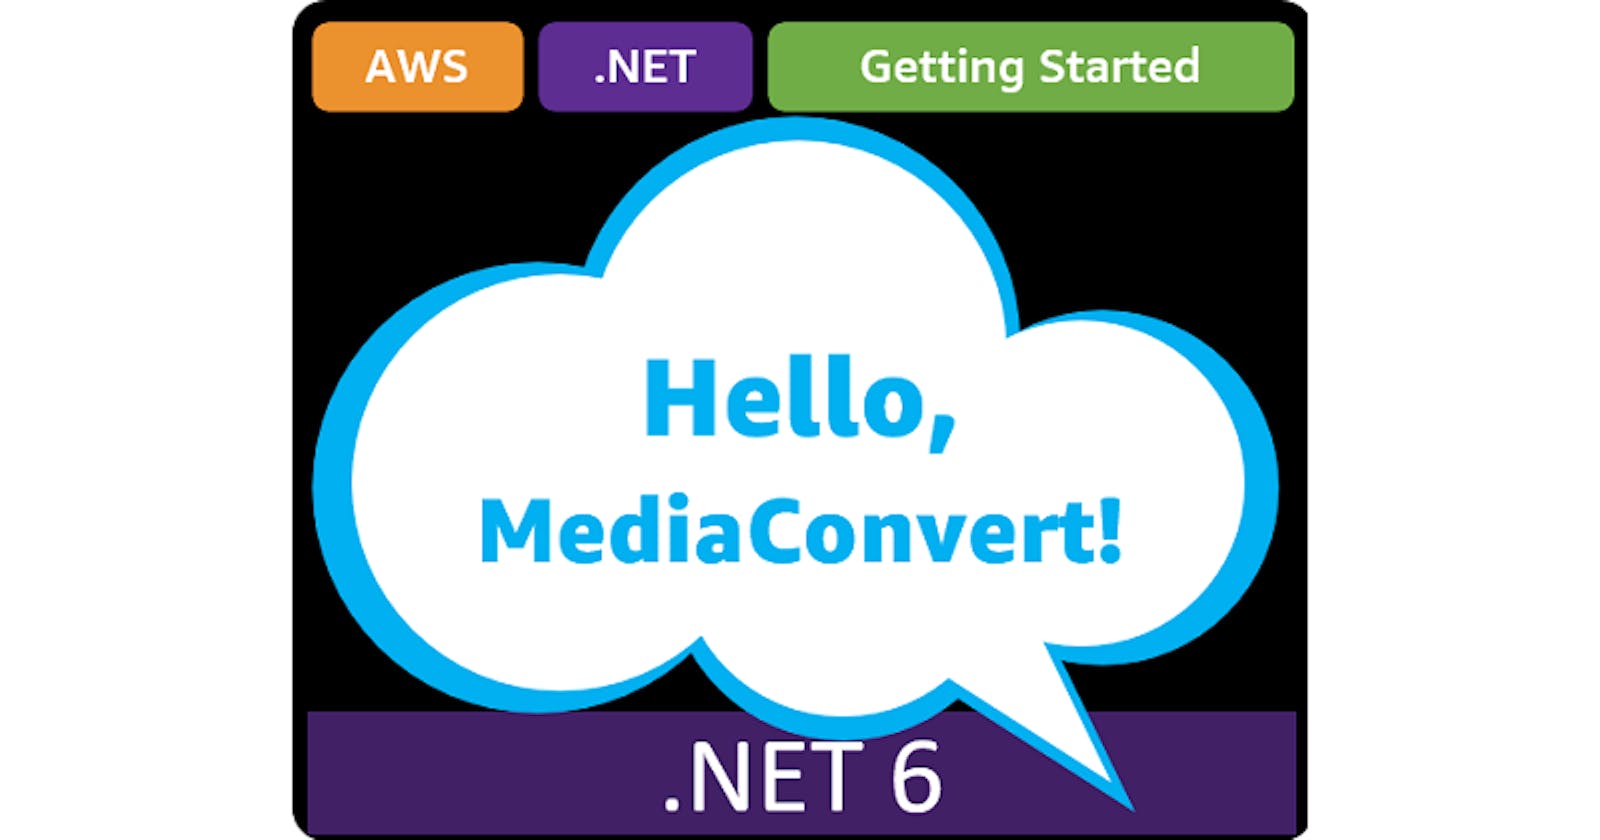 Hello, MediaConvert!